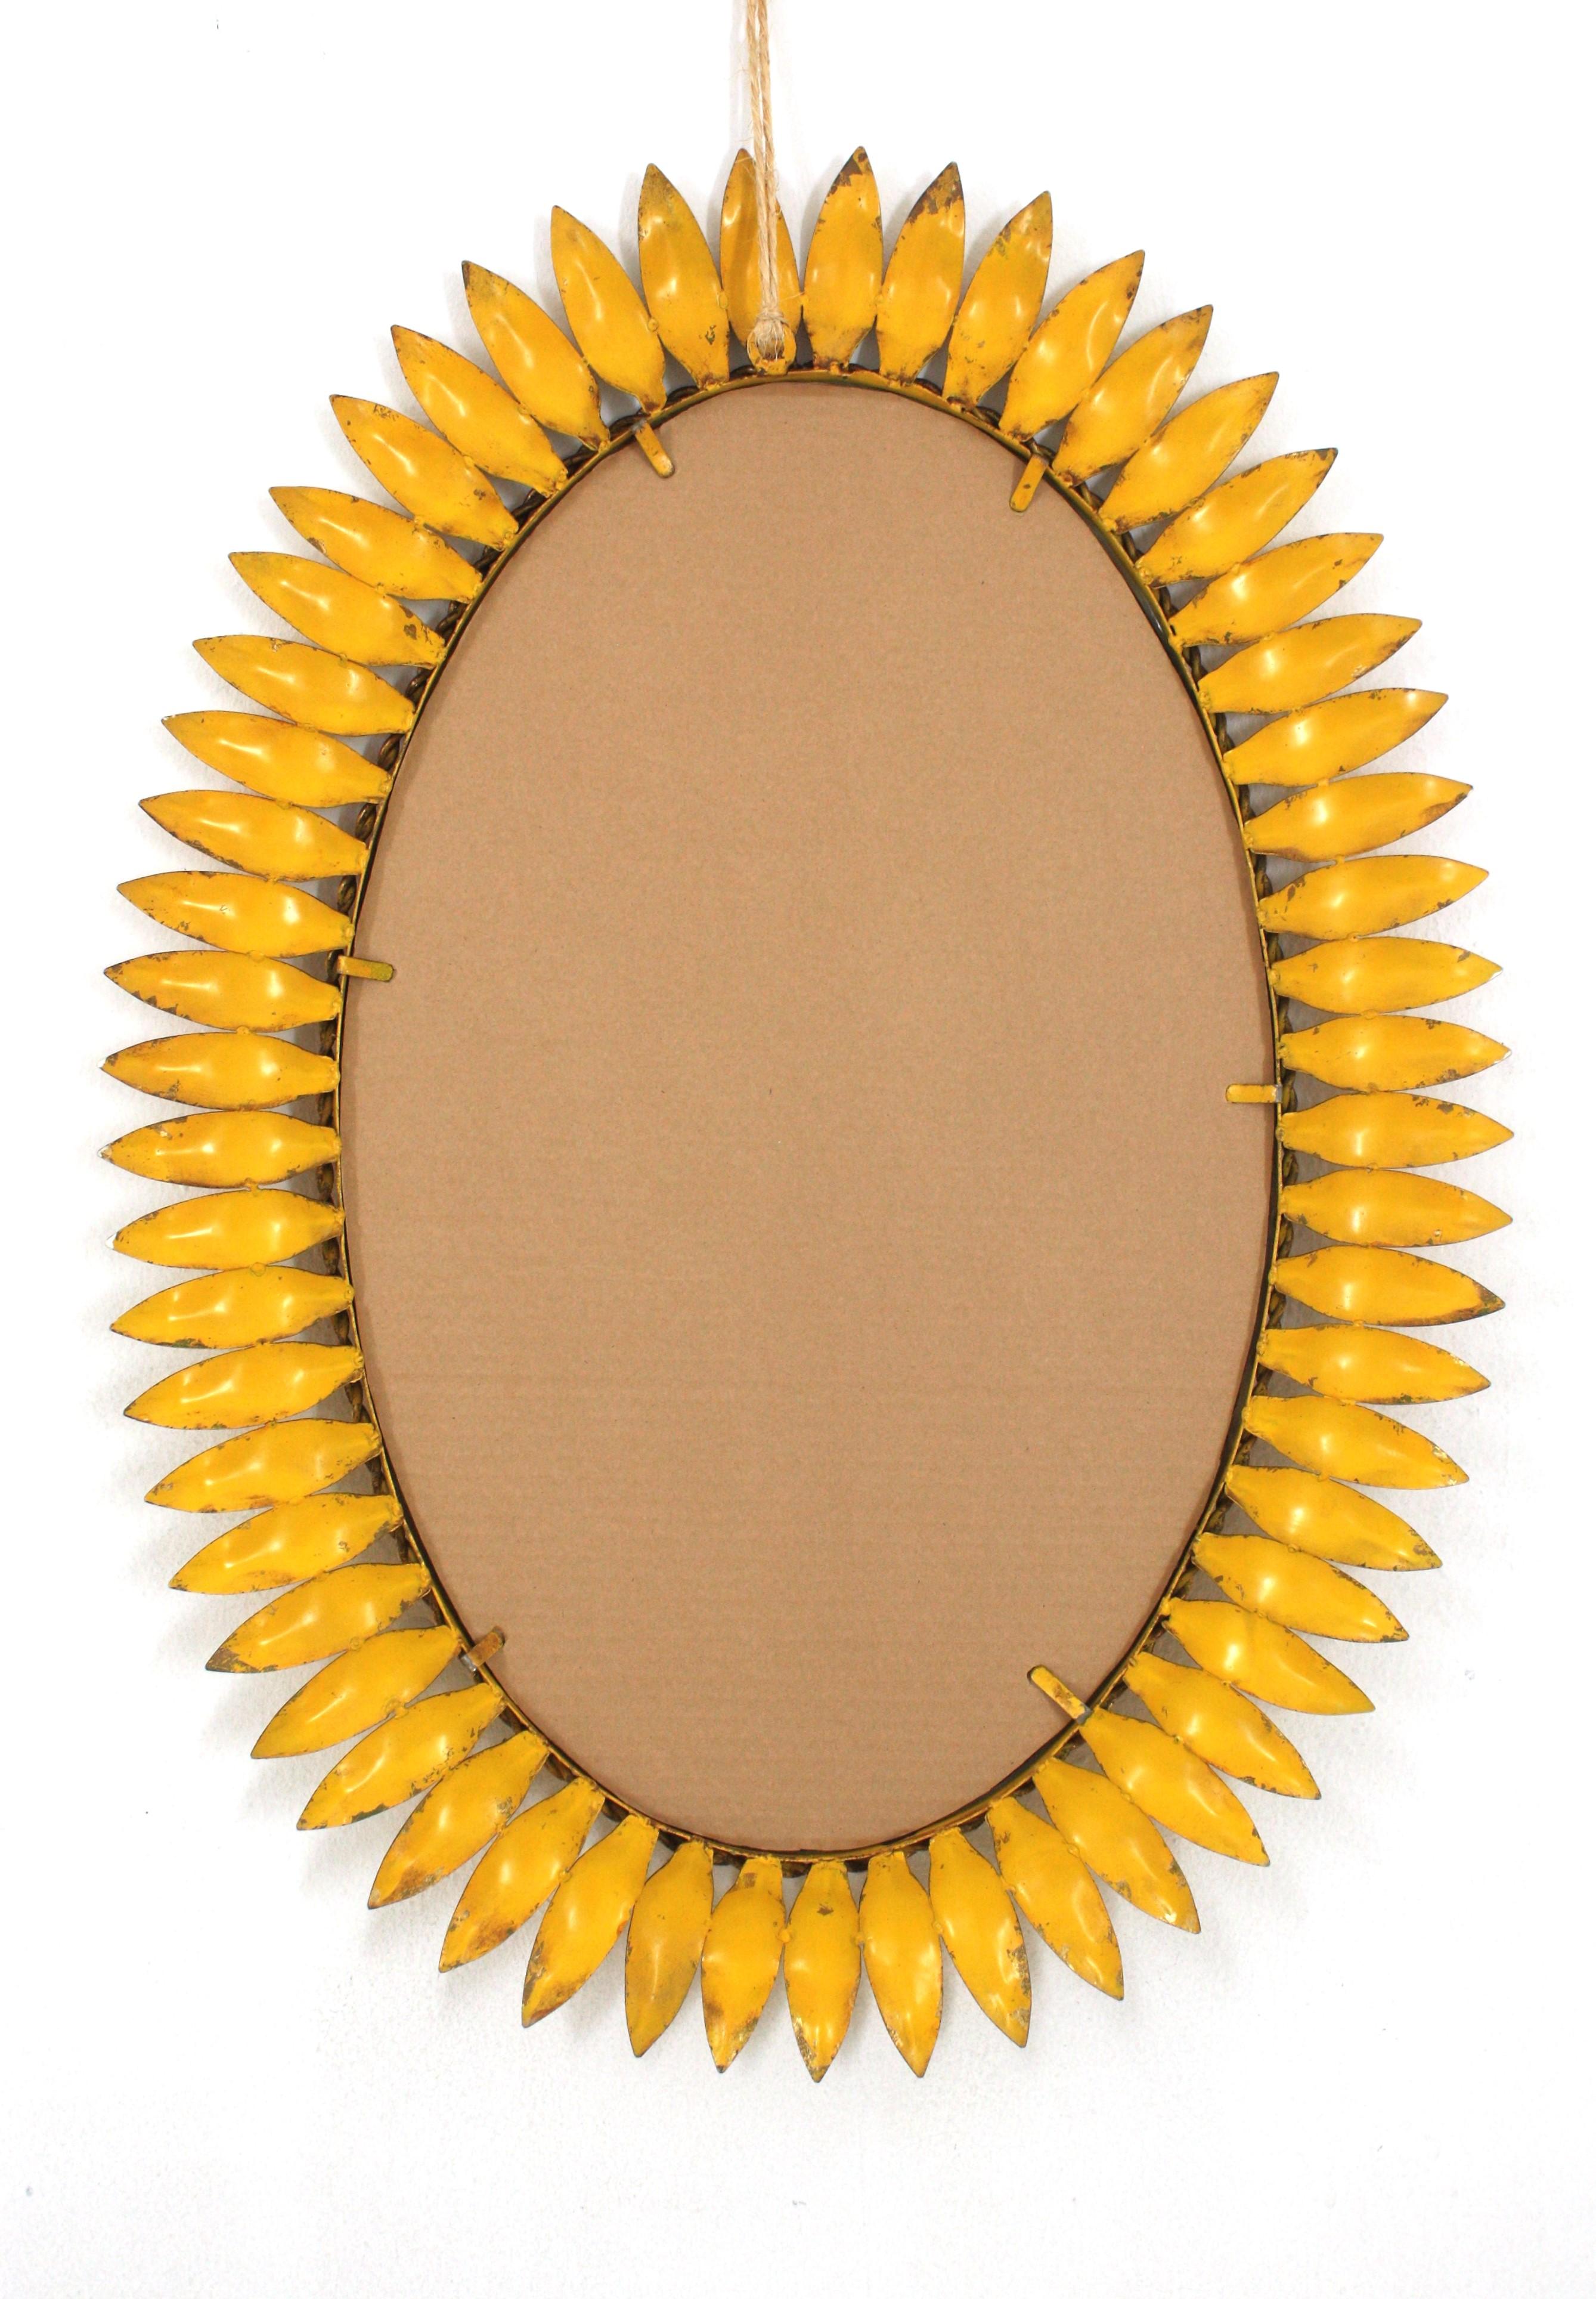 Sunburst Oval Mirror in Gilt Metal, Spain, 1950s For Sale 5